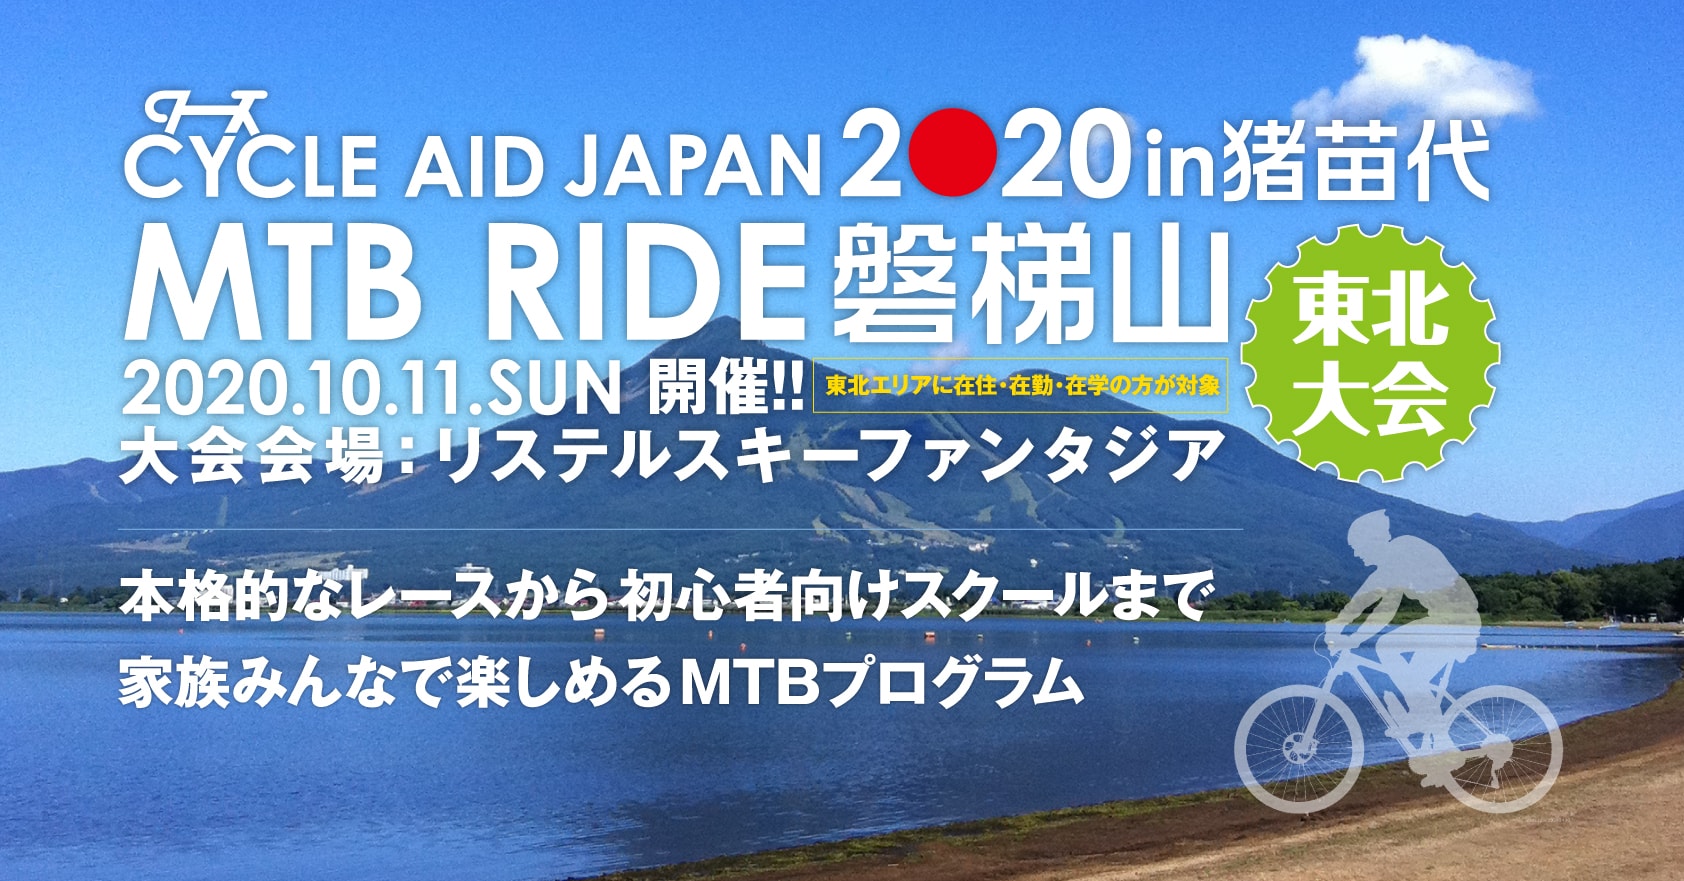 Cycle Aid Japan In 猪苗代 Mtb Ride 磐梯山トップページ